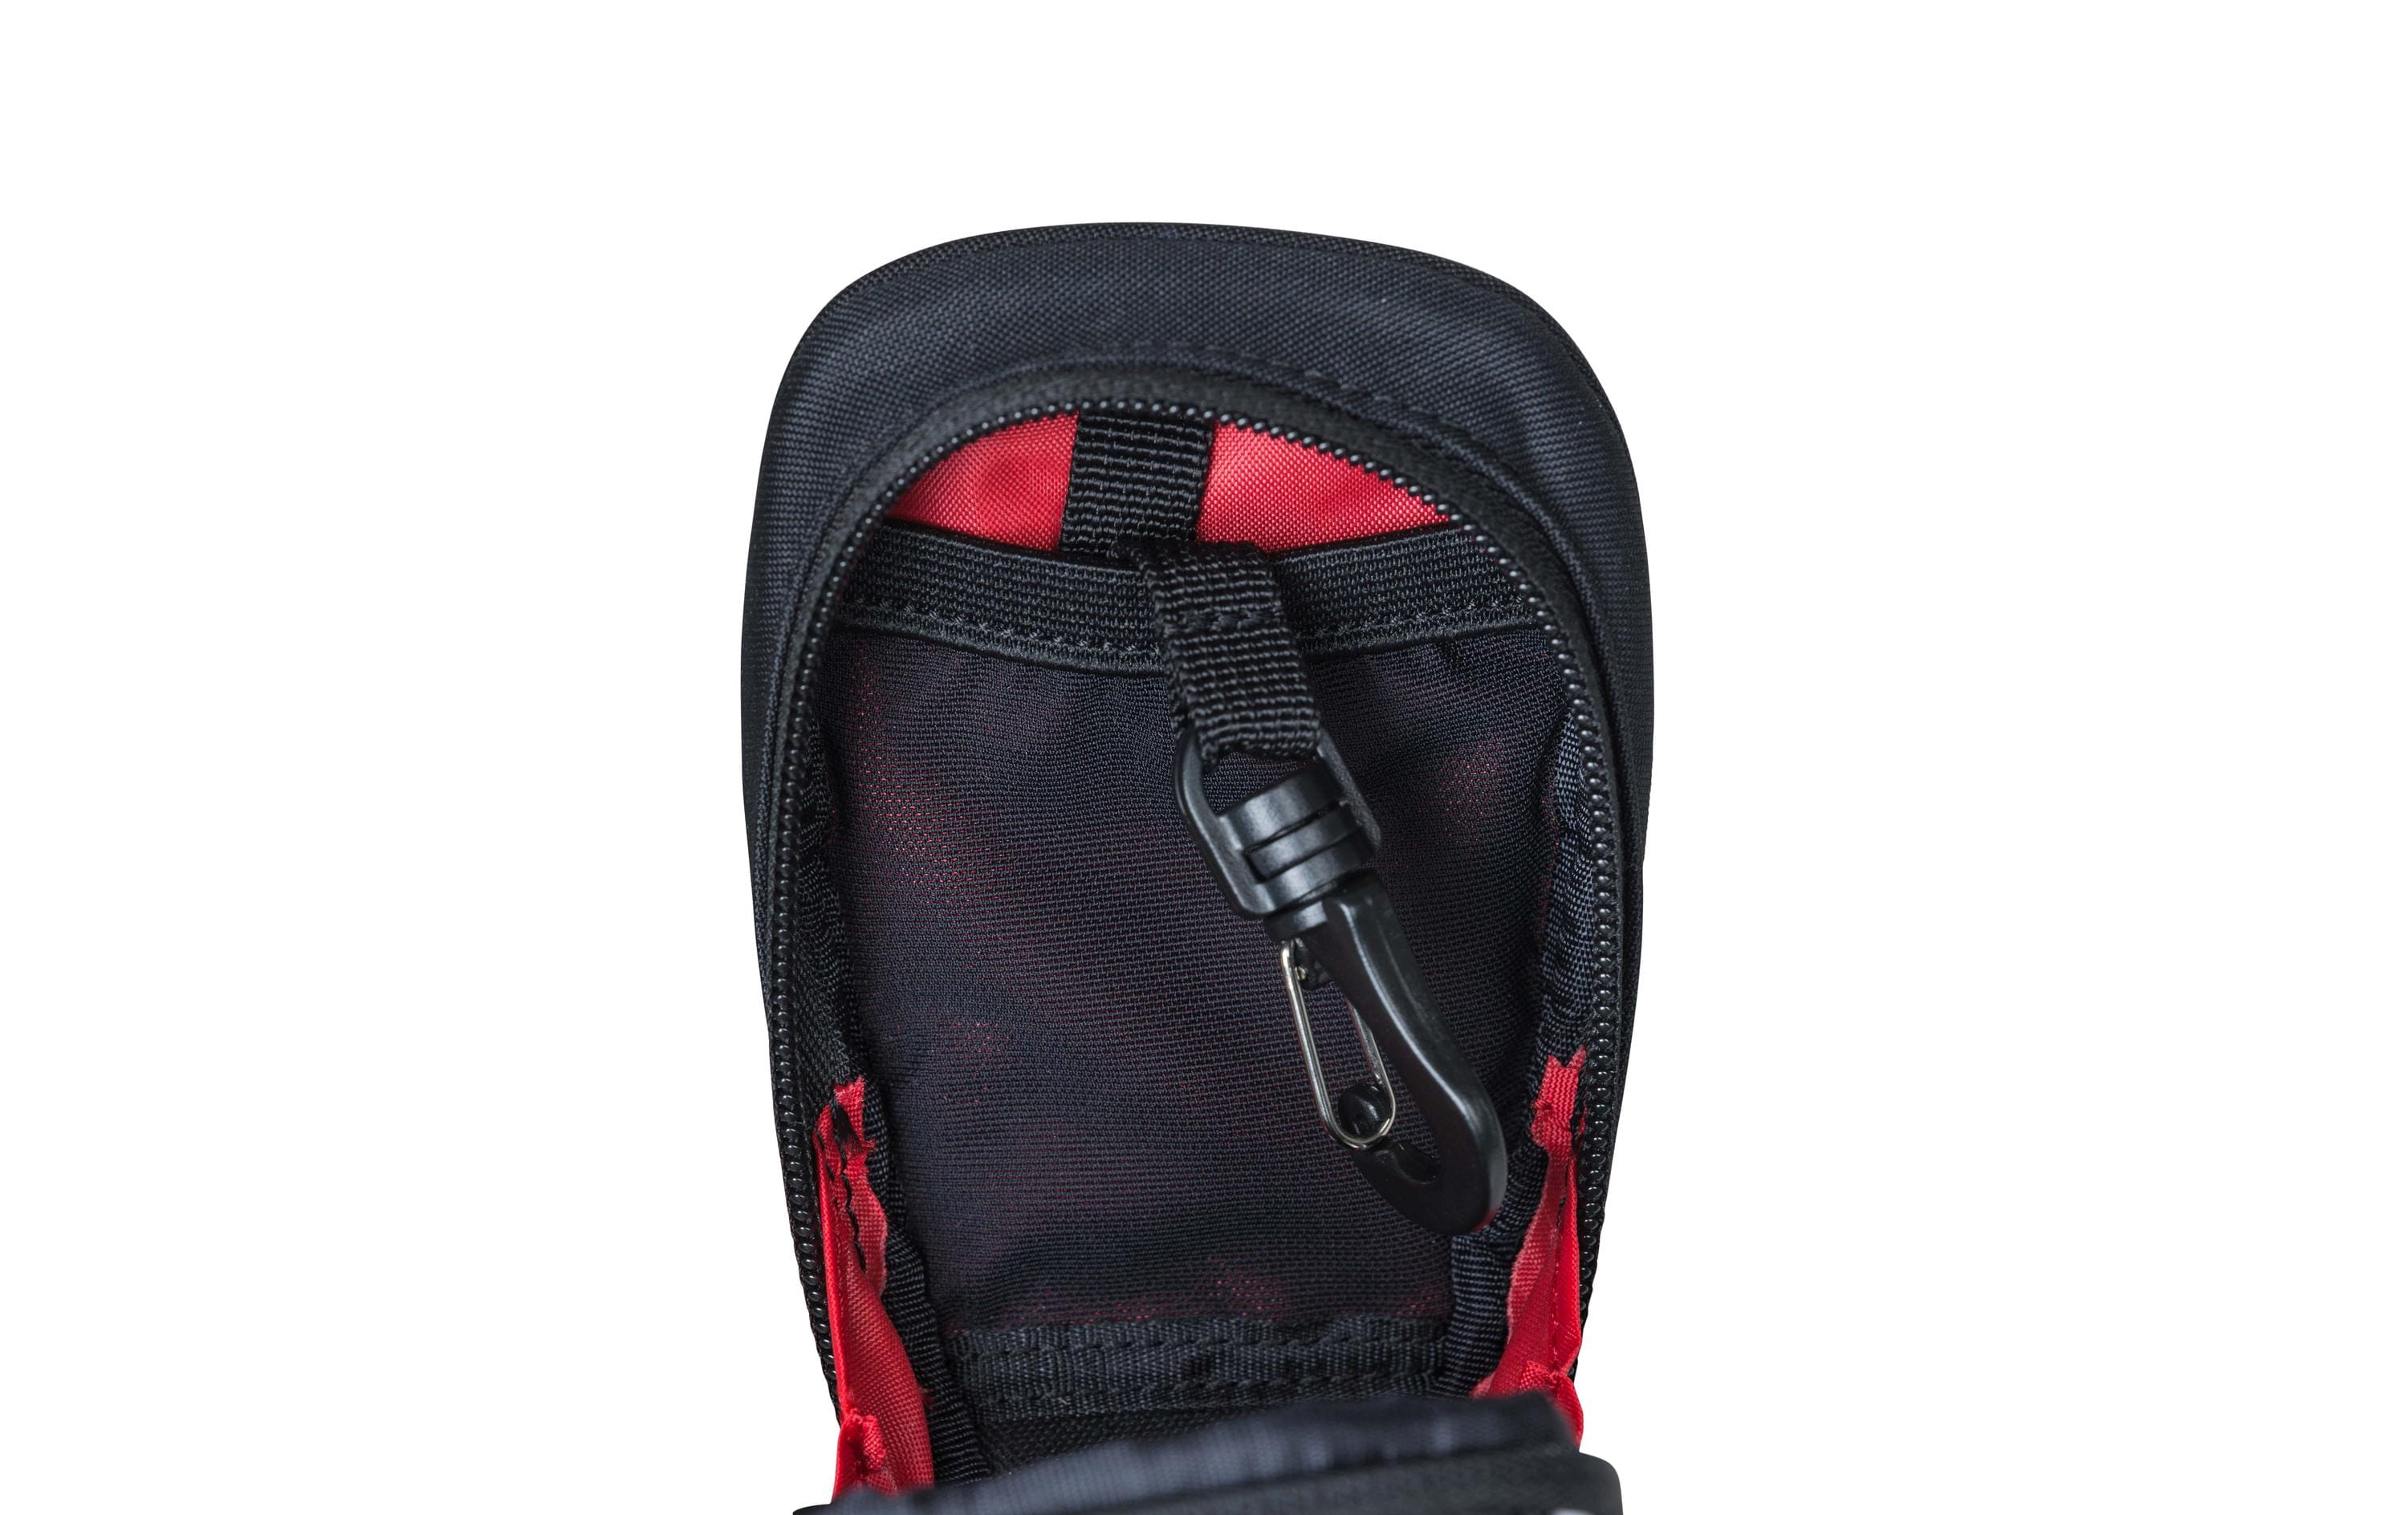 BASIL Satteltasche Sport Design Wedge Bag